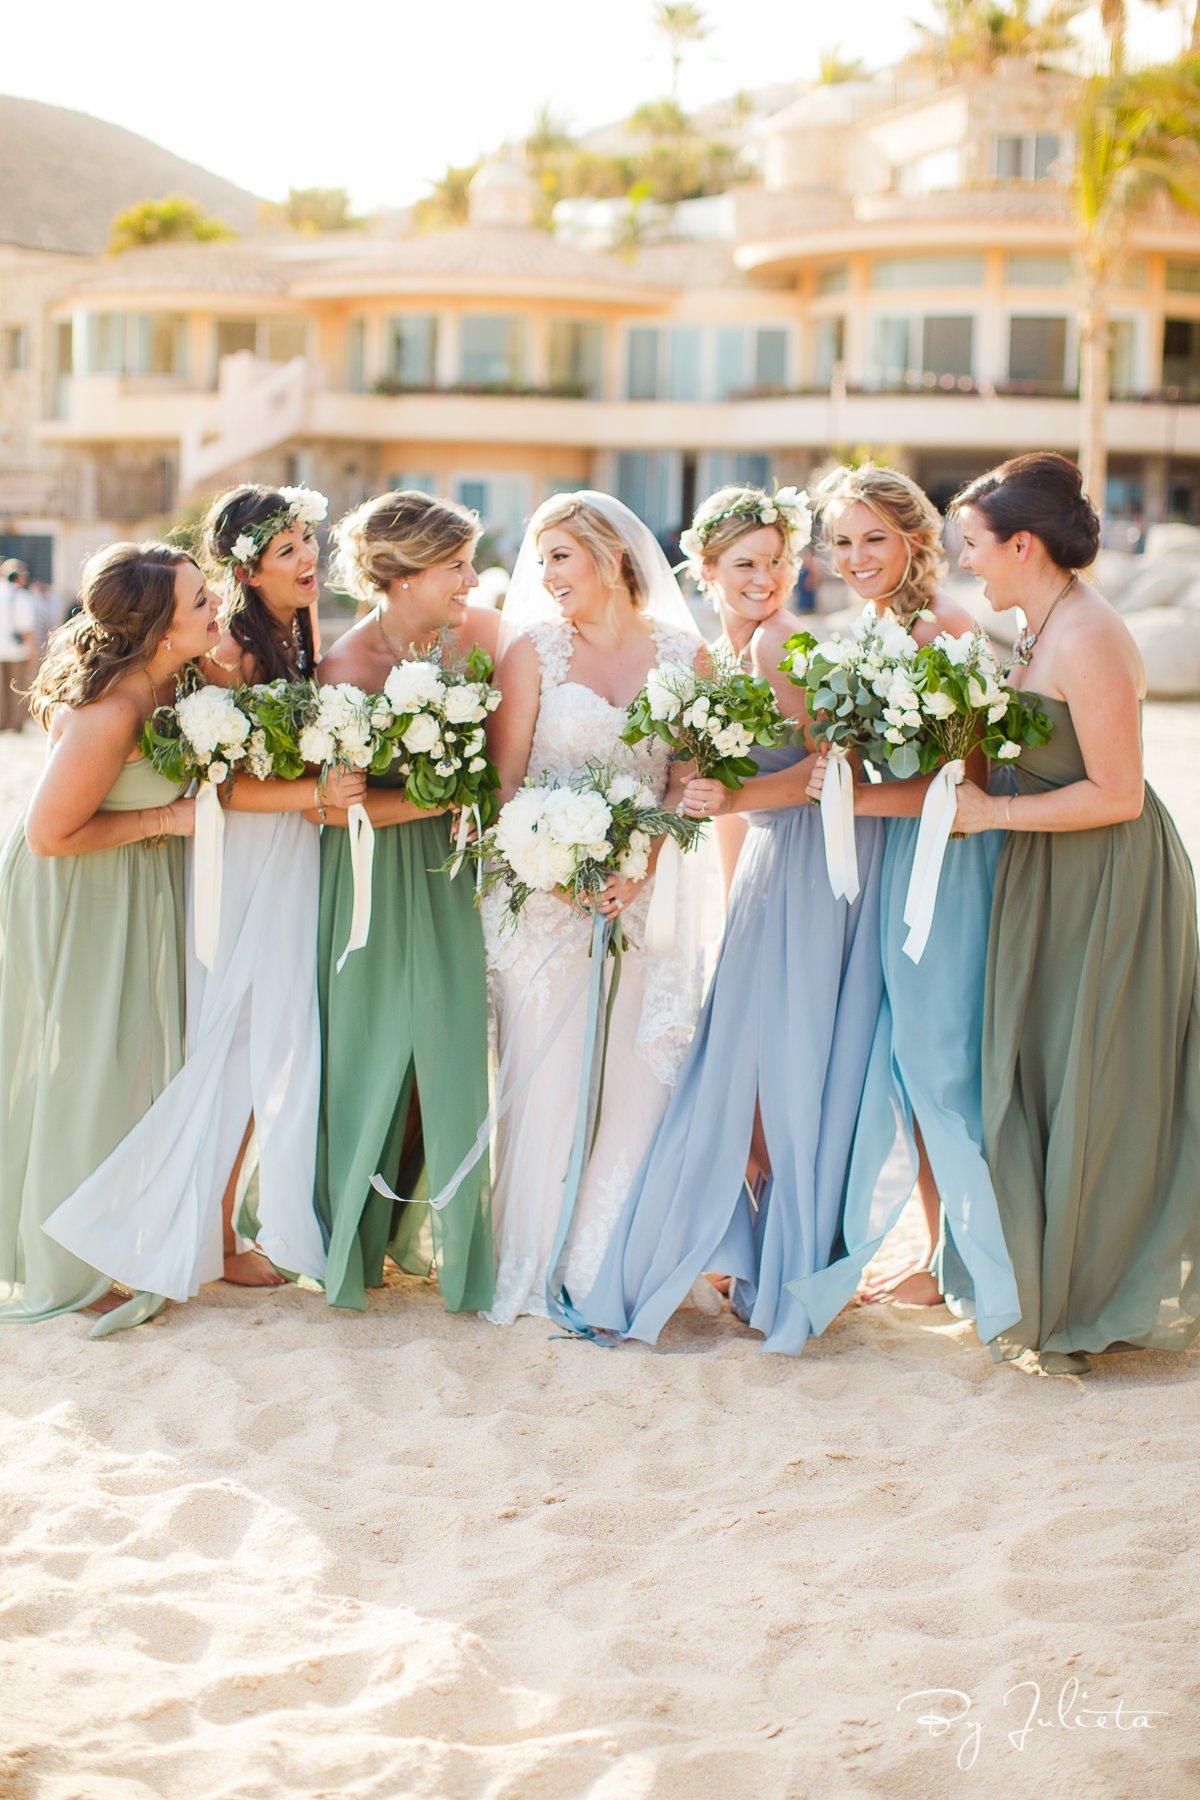 New Summer Bridesmaid Dress Fun: Pretty Pastels - Tulle & Chantilly Wedding  Blog | Pastel bridesmaid dresses, Summer bridesmaid dresses, Pastel  bridesmaids